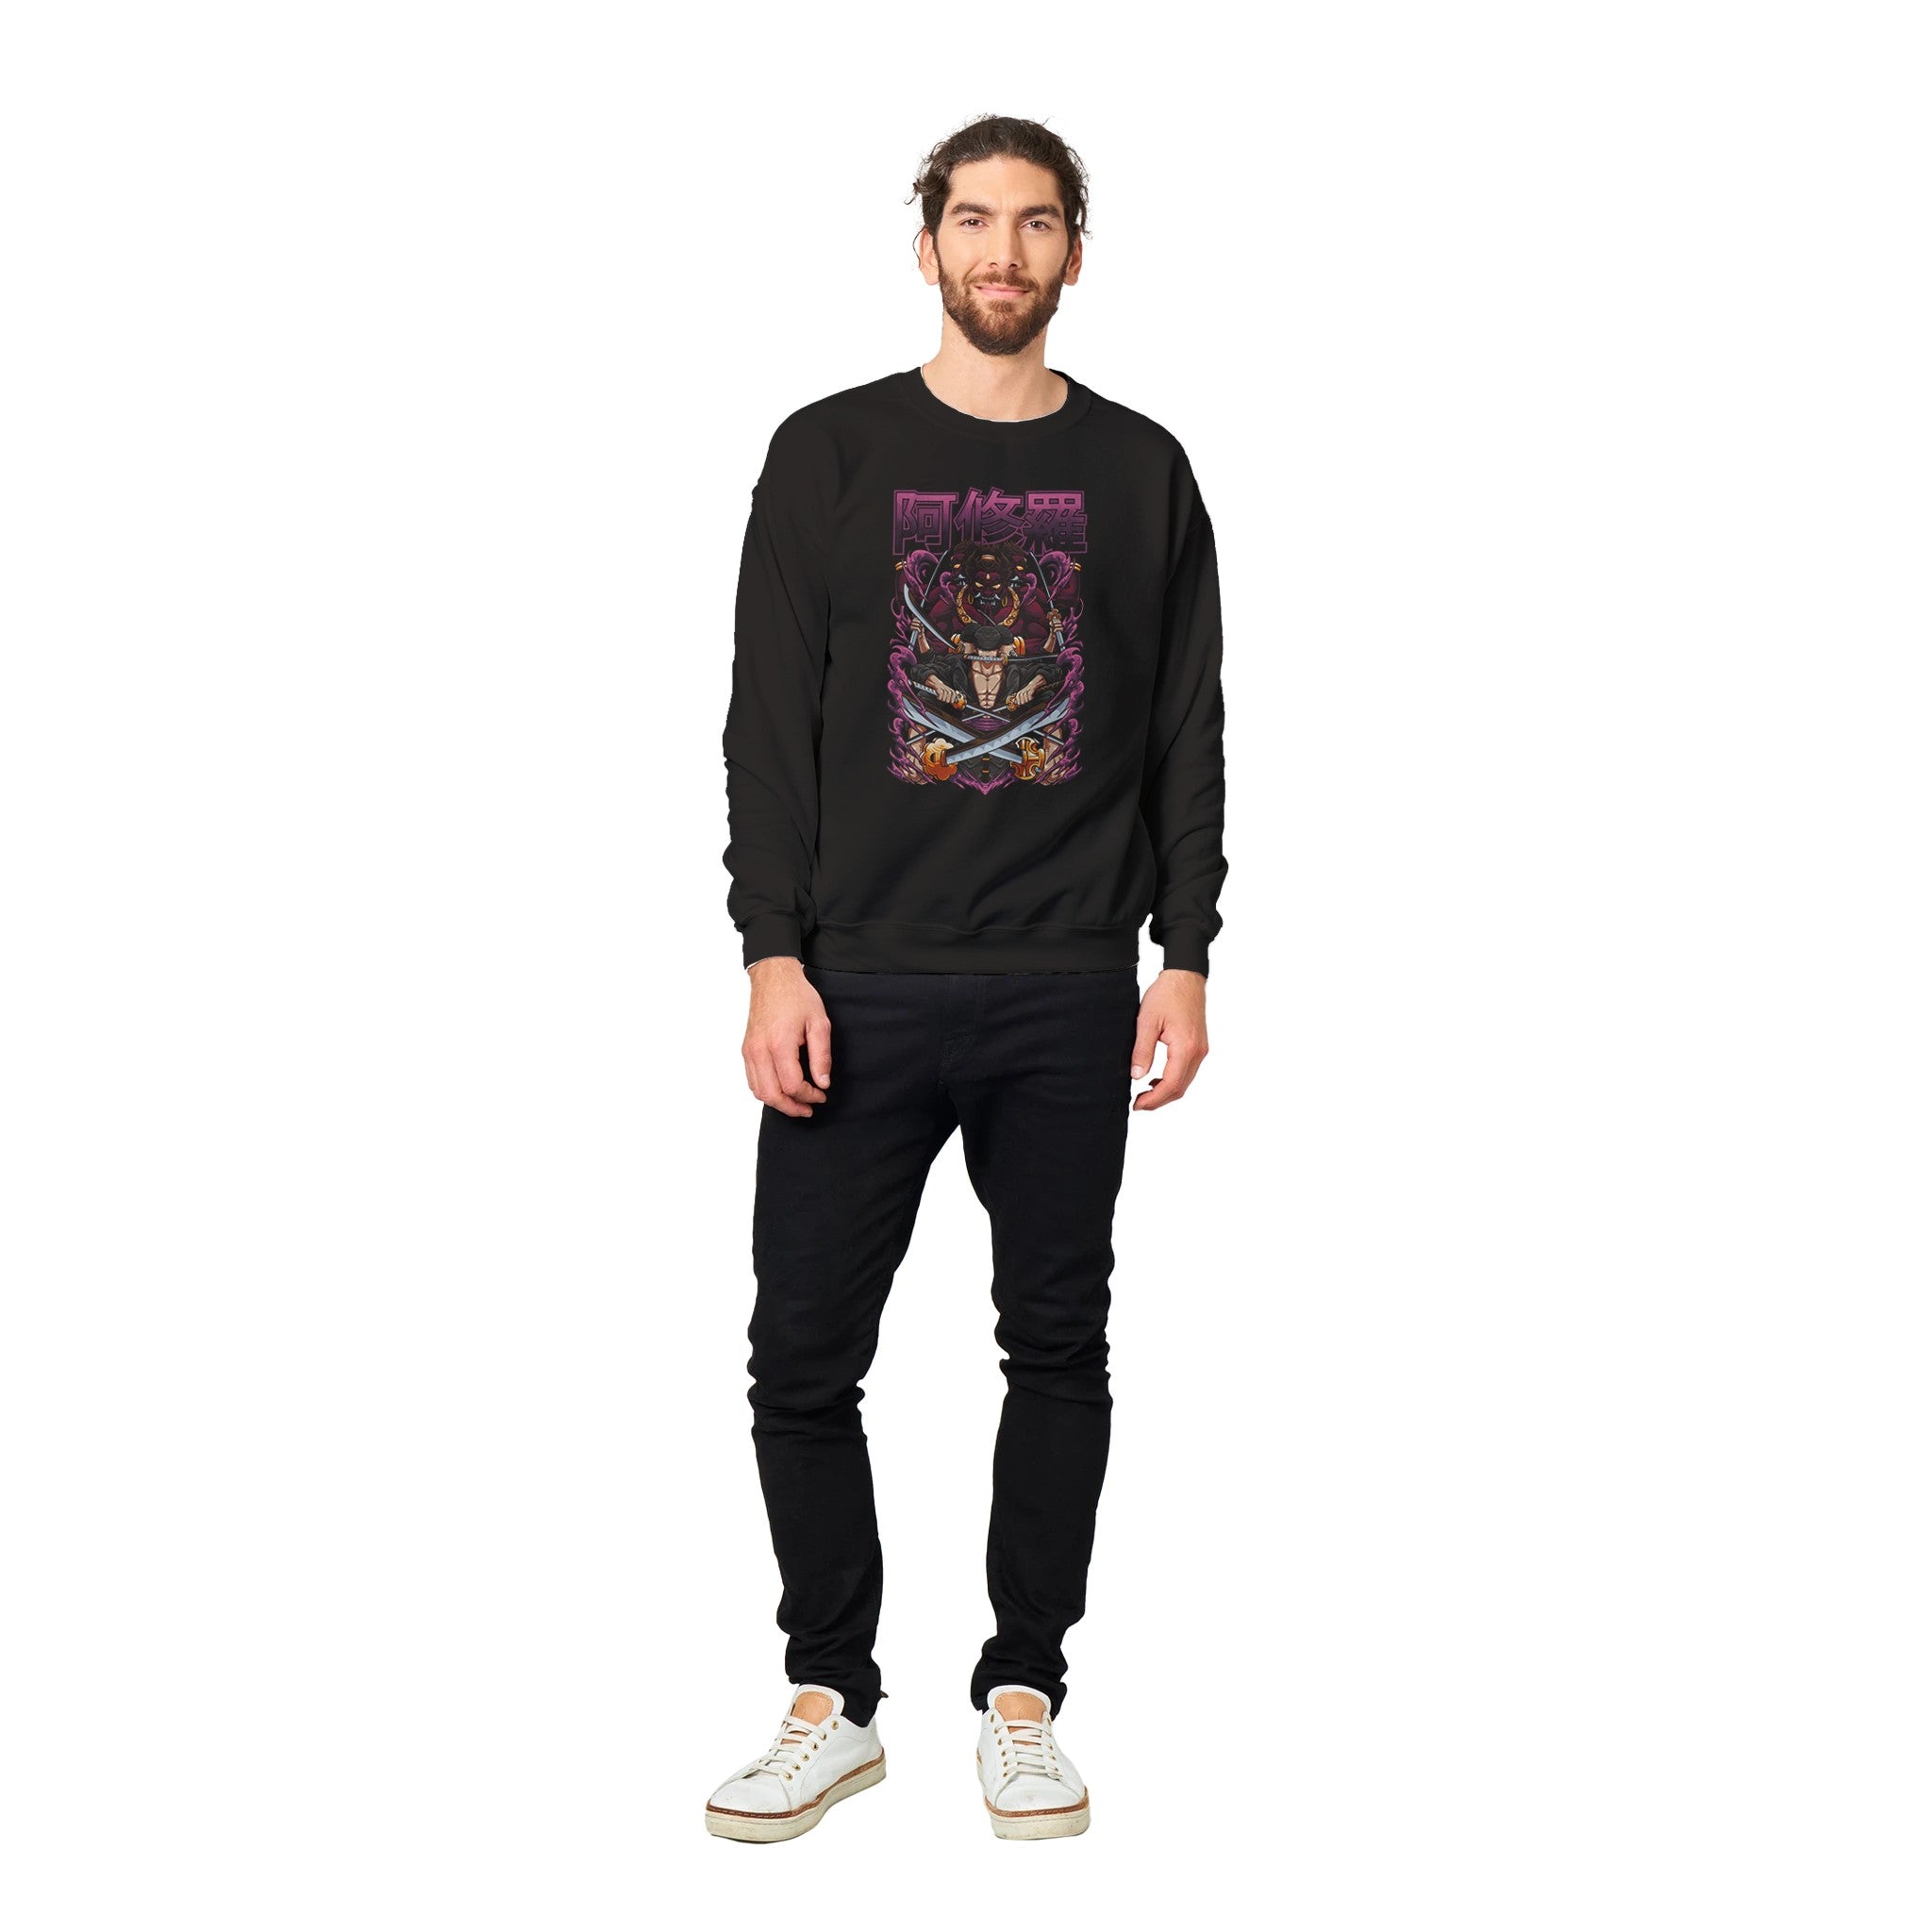 shop and buy one piece zoro anime clothing sweatshirt/jumper